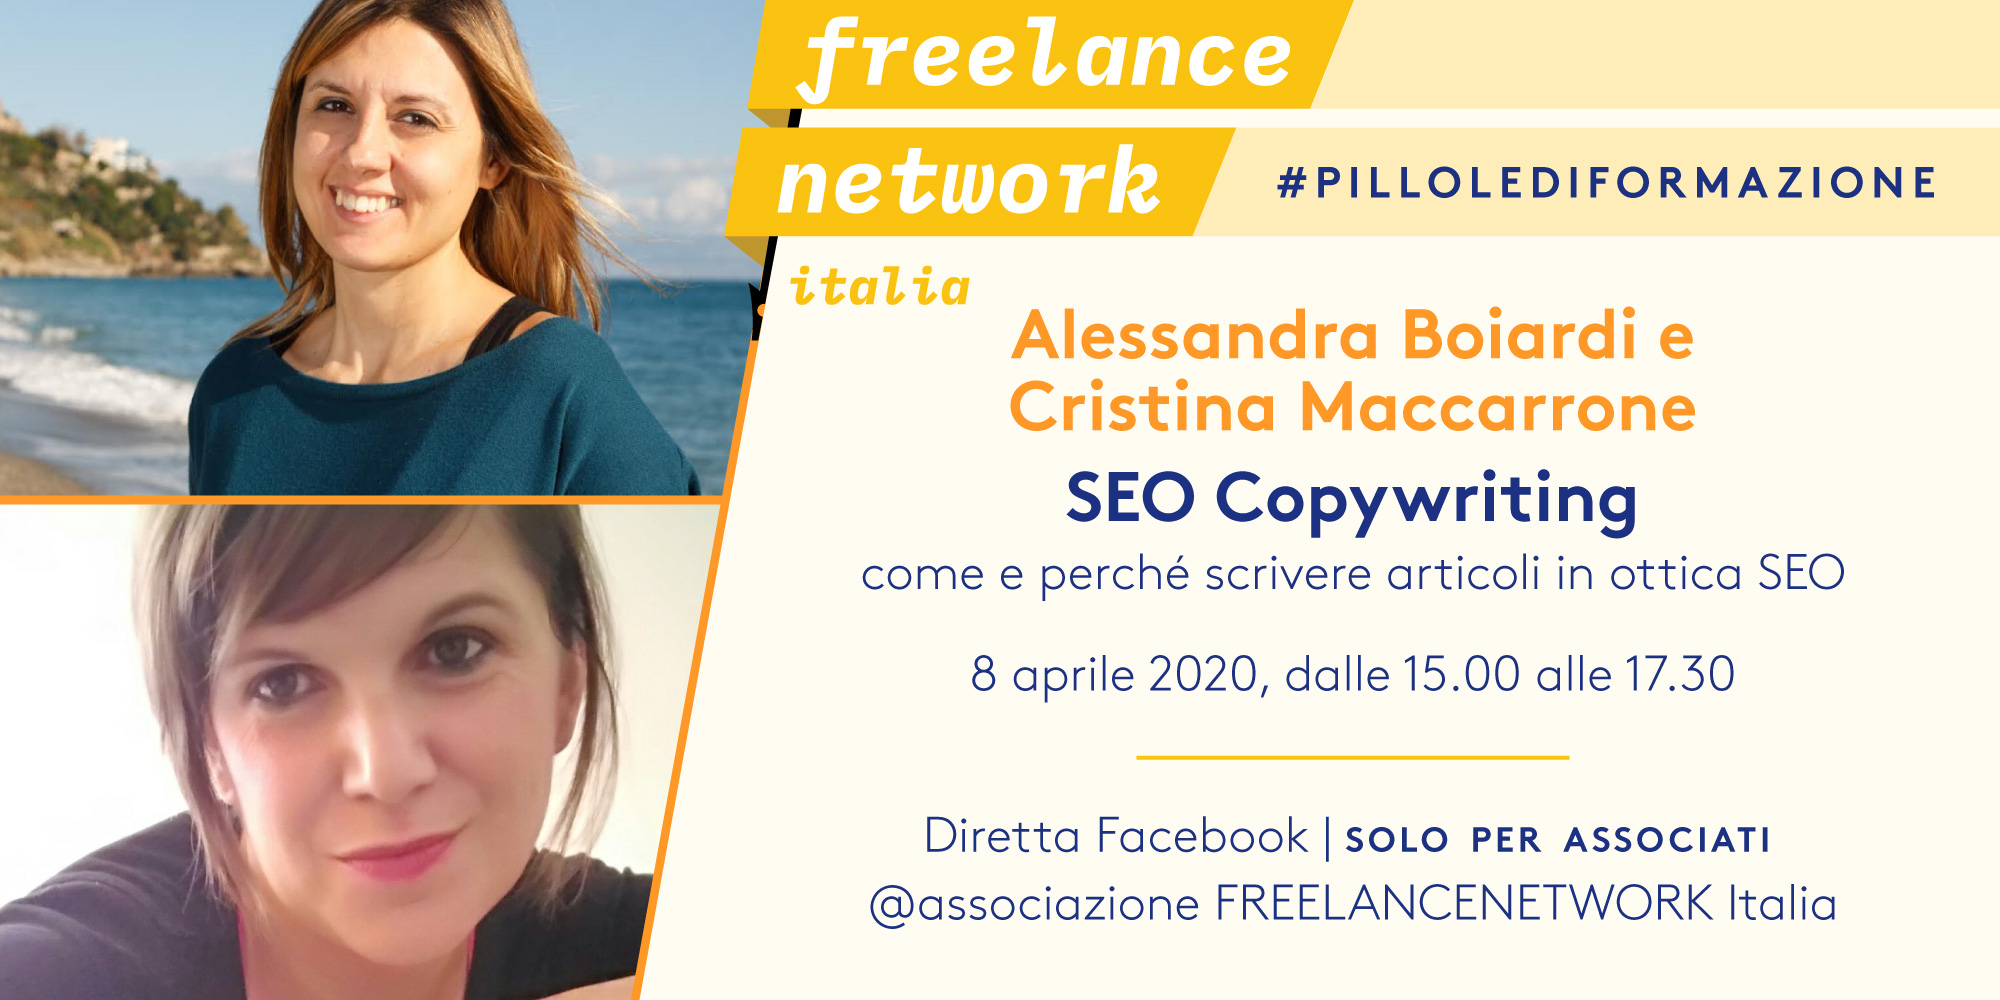 Freelance Network Italia